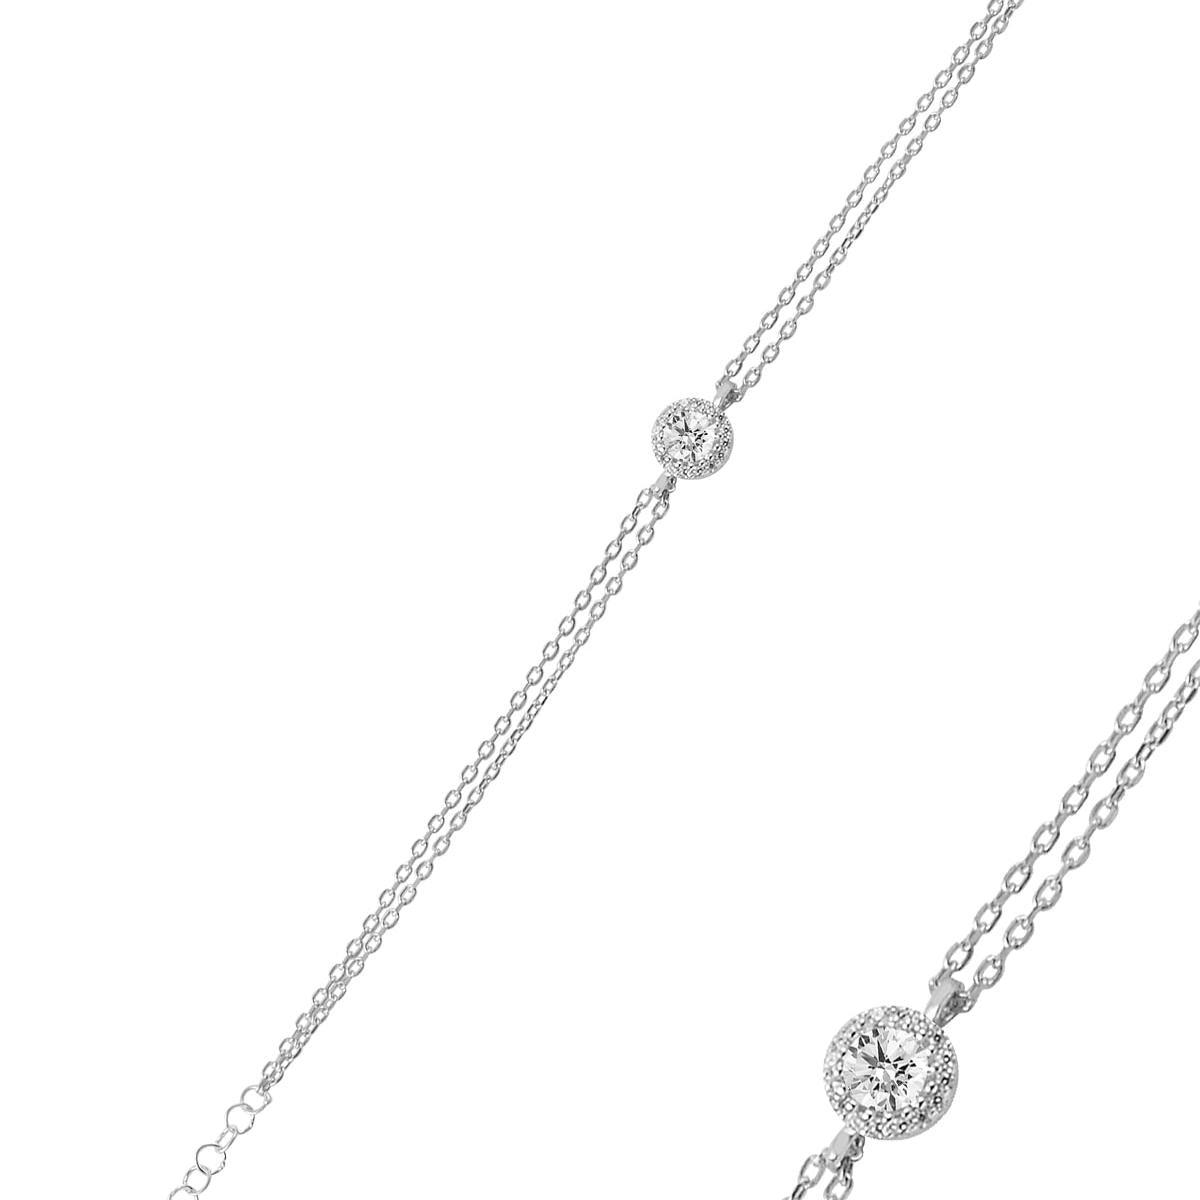 Diamond Solitaire Bracelet • Solitaire Diamond Bracelet • Gift For Her - Trending Silver Gifts